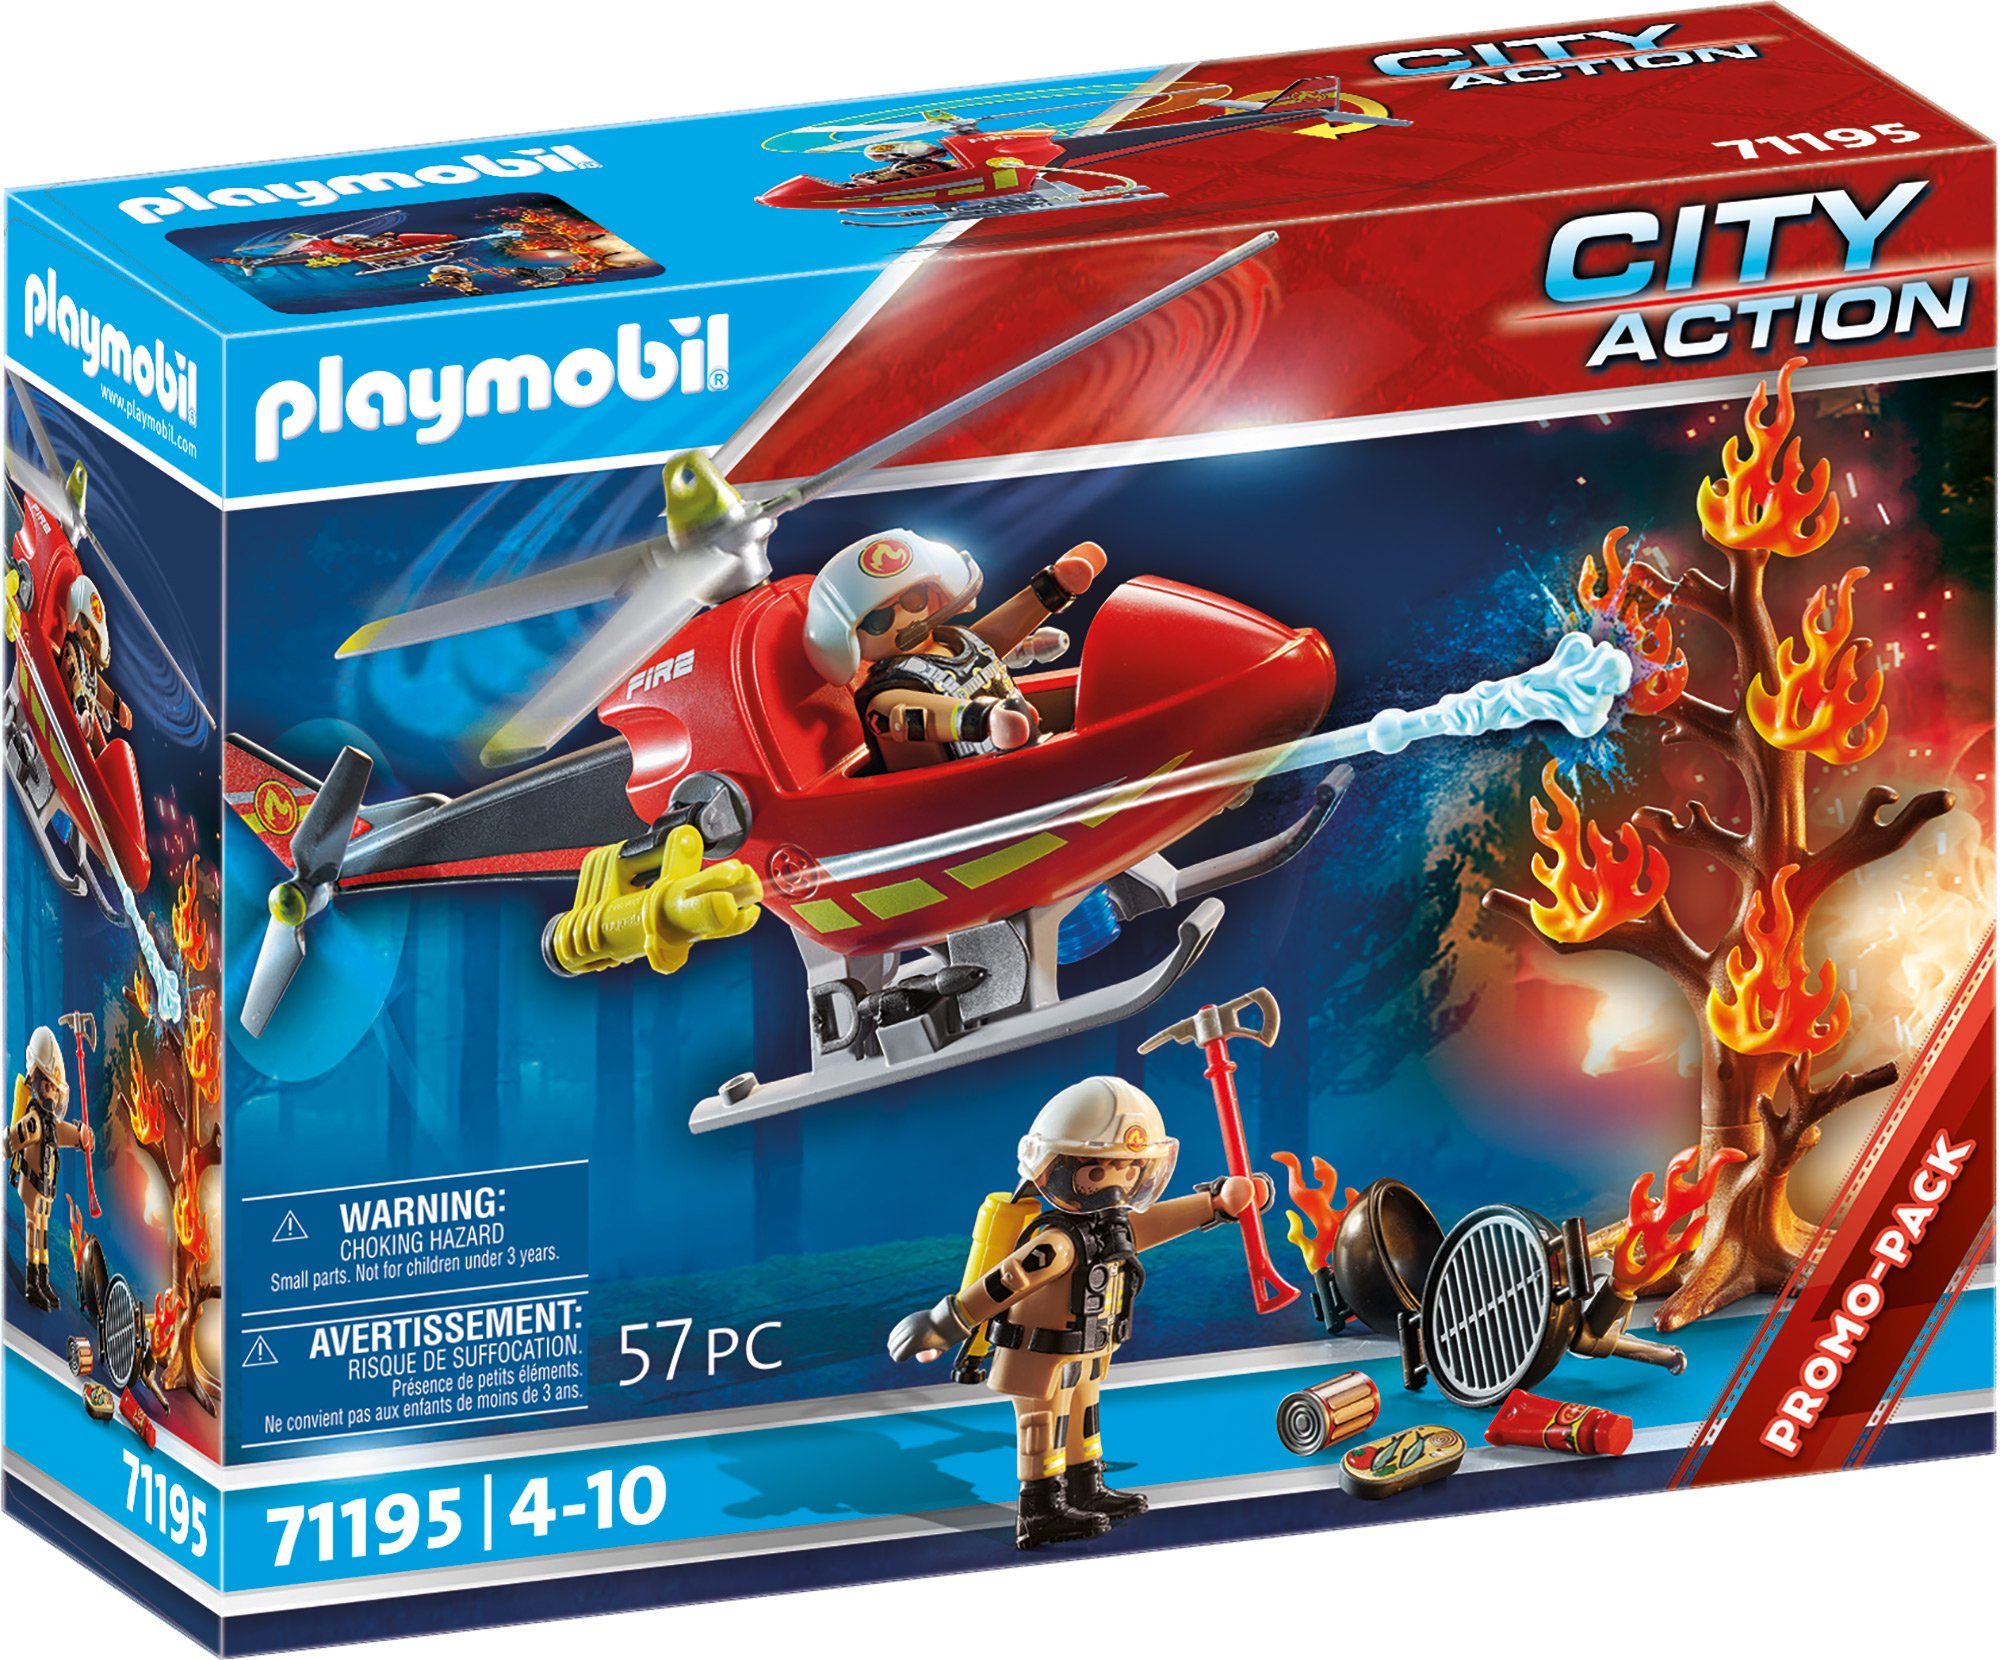 Playmobil® Konstruktions-Spielset Made Germany St), Feuerwehr-Hubschrauber (71195), Action, City in (57